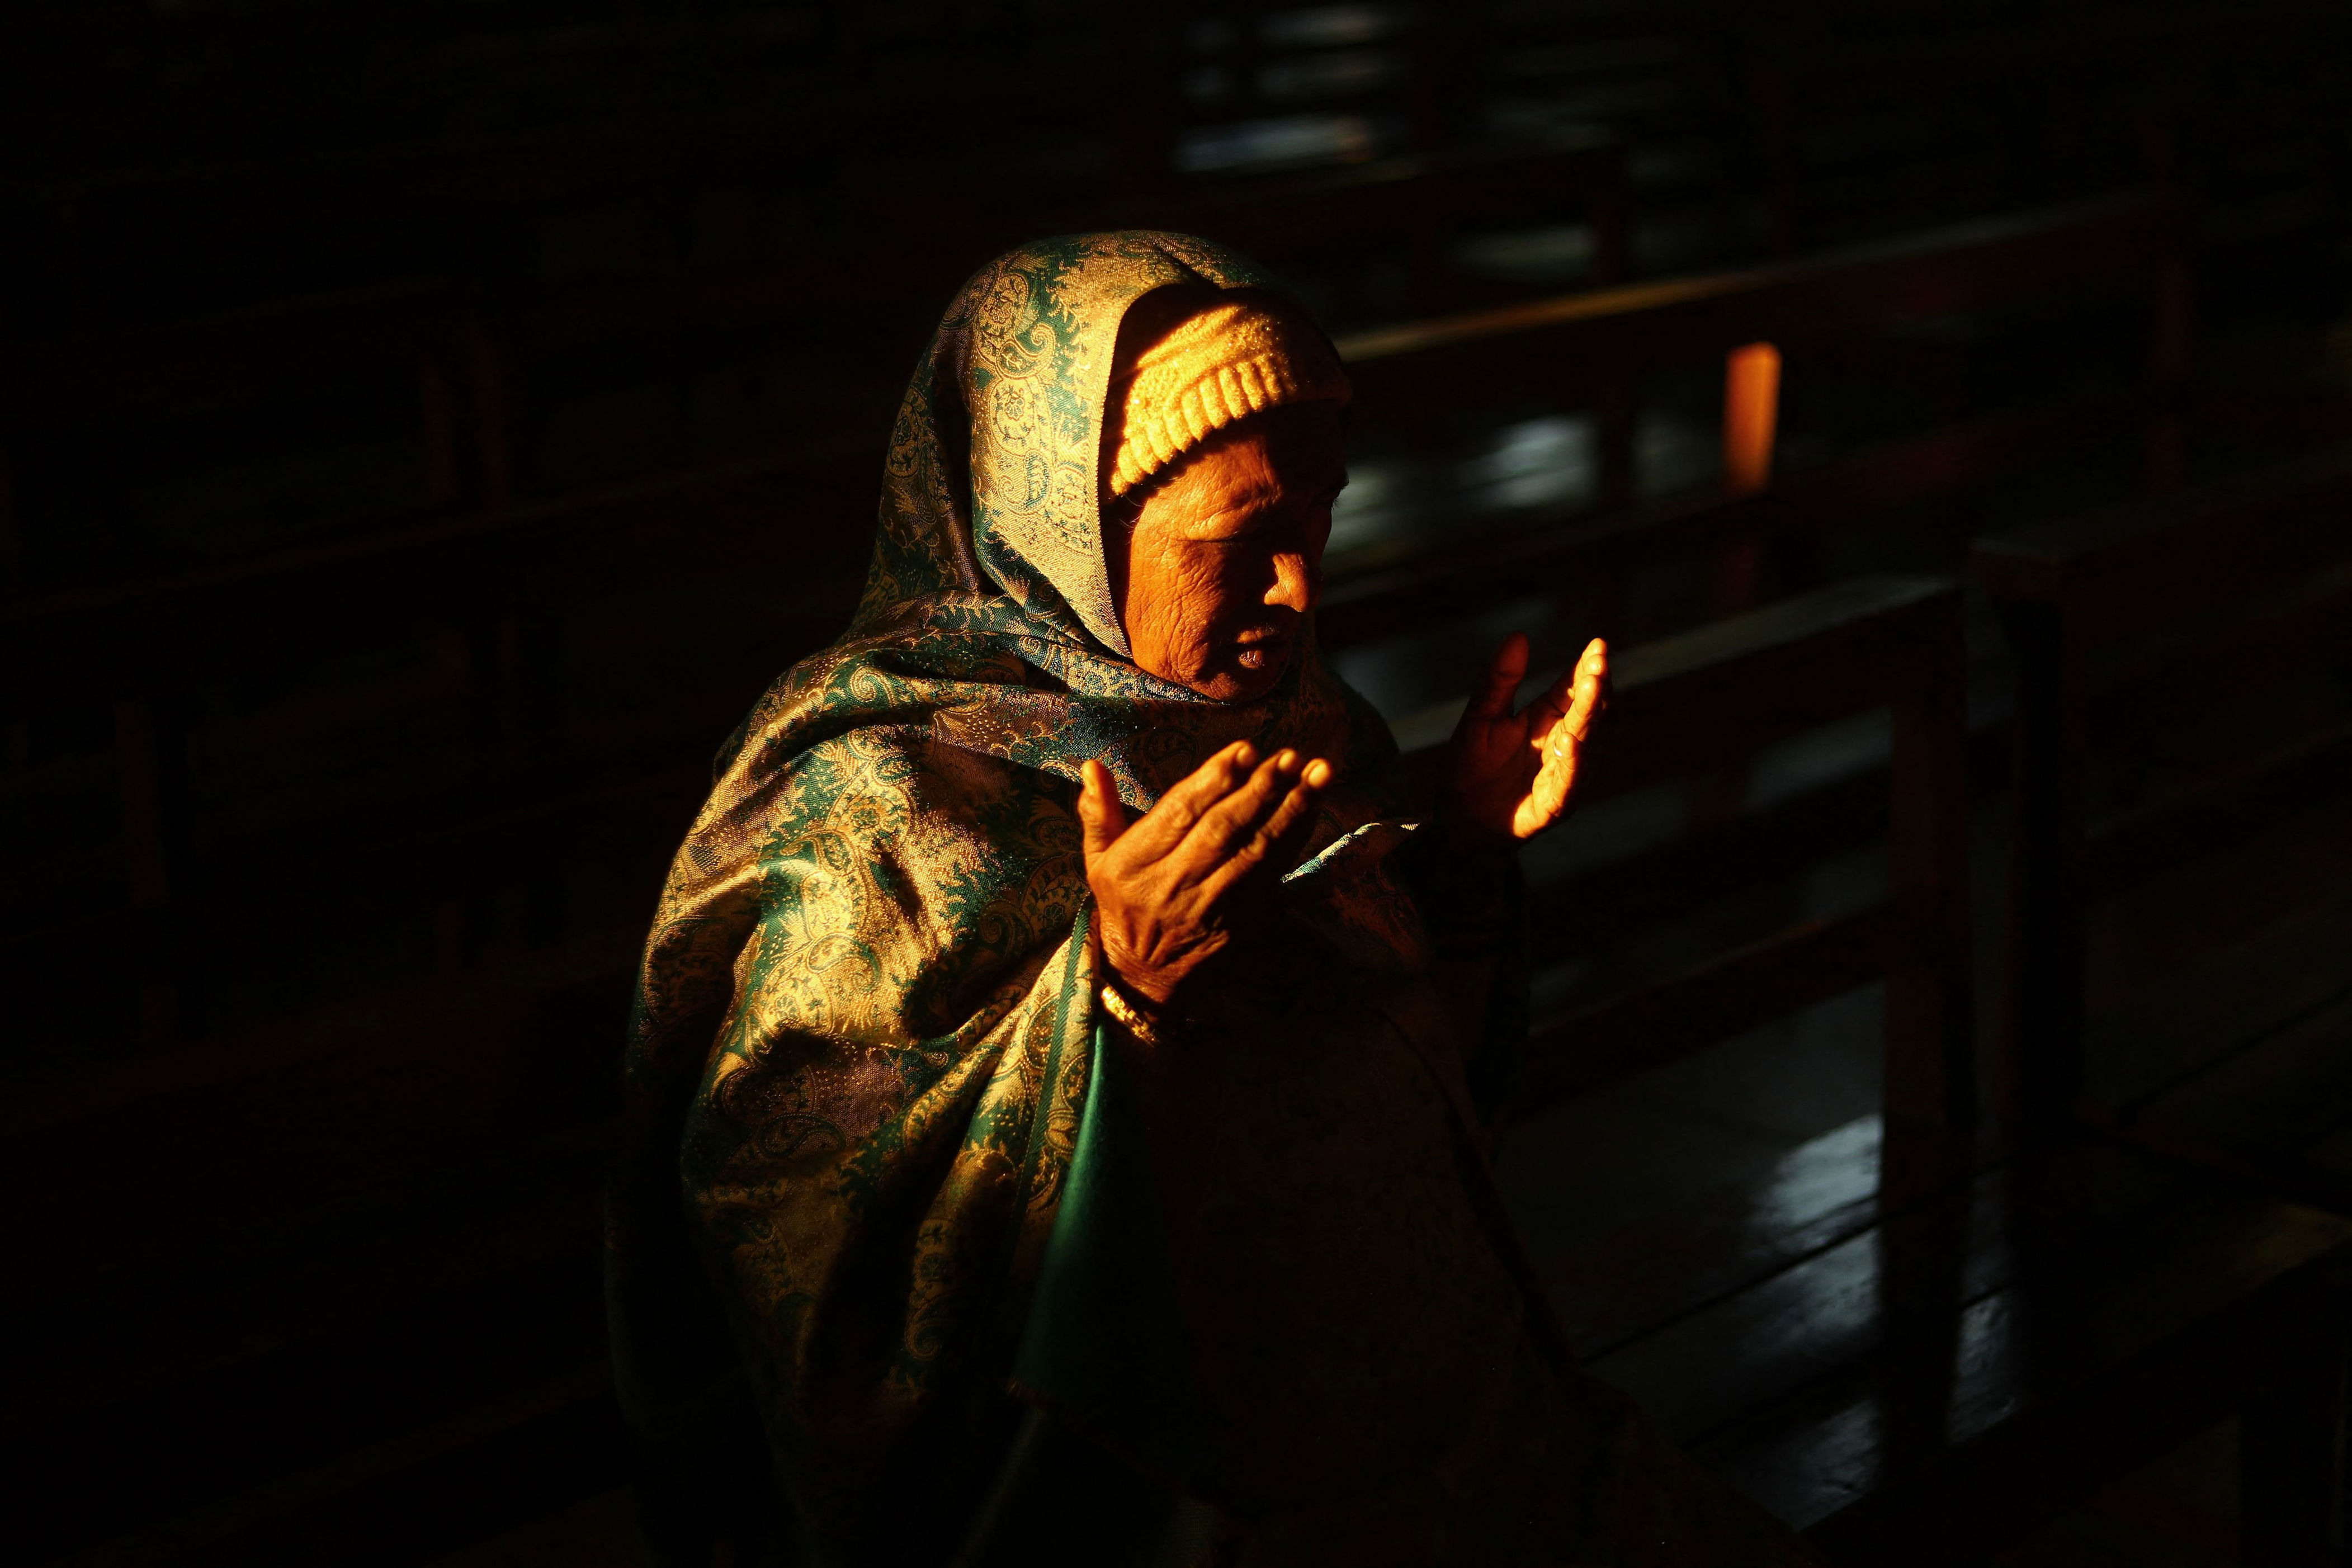 today's best photos: midnight mass, from chandigarh to surabaya